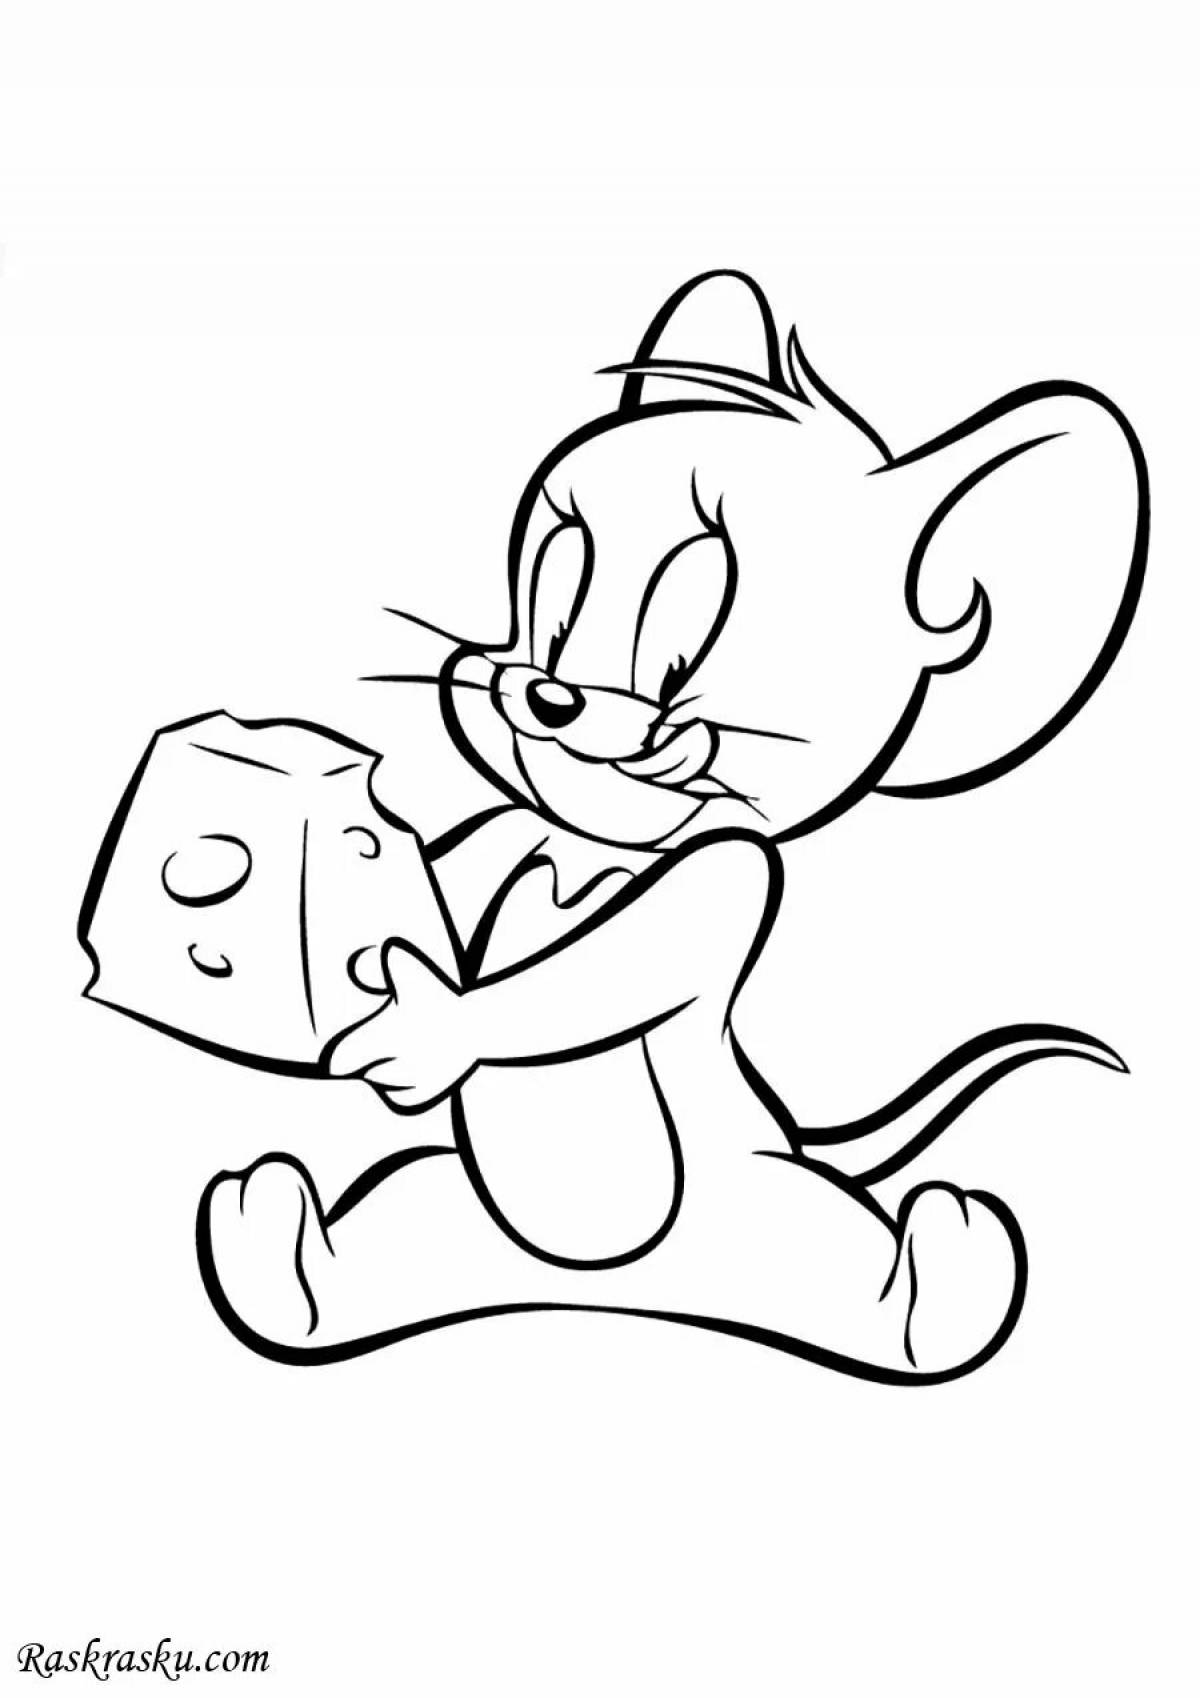 Cartoon mouse #6